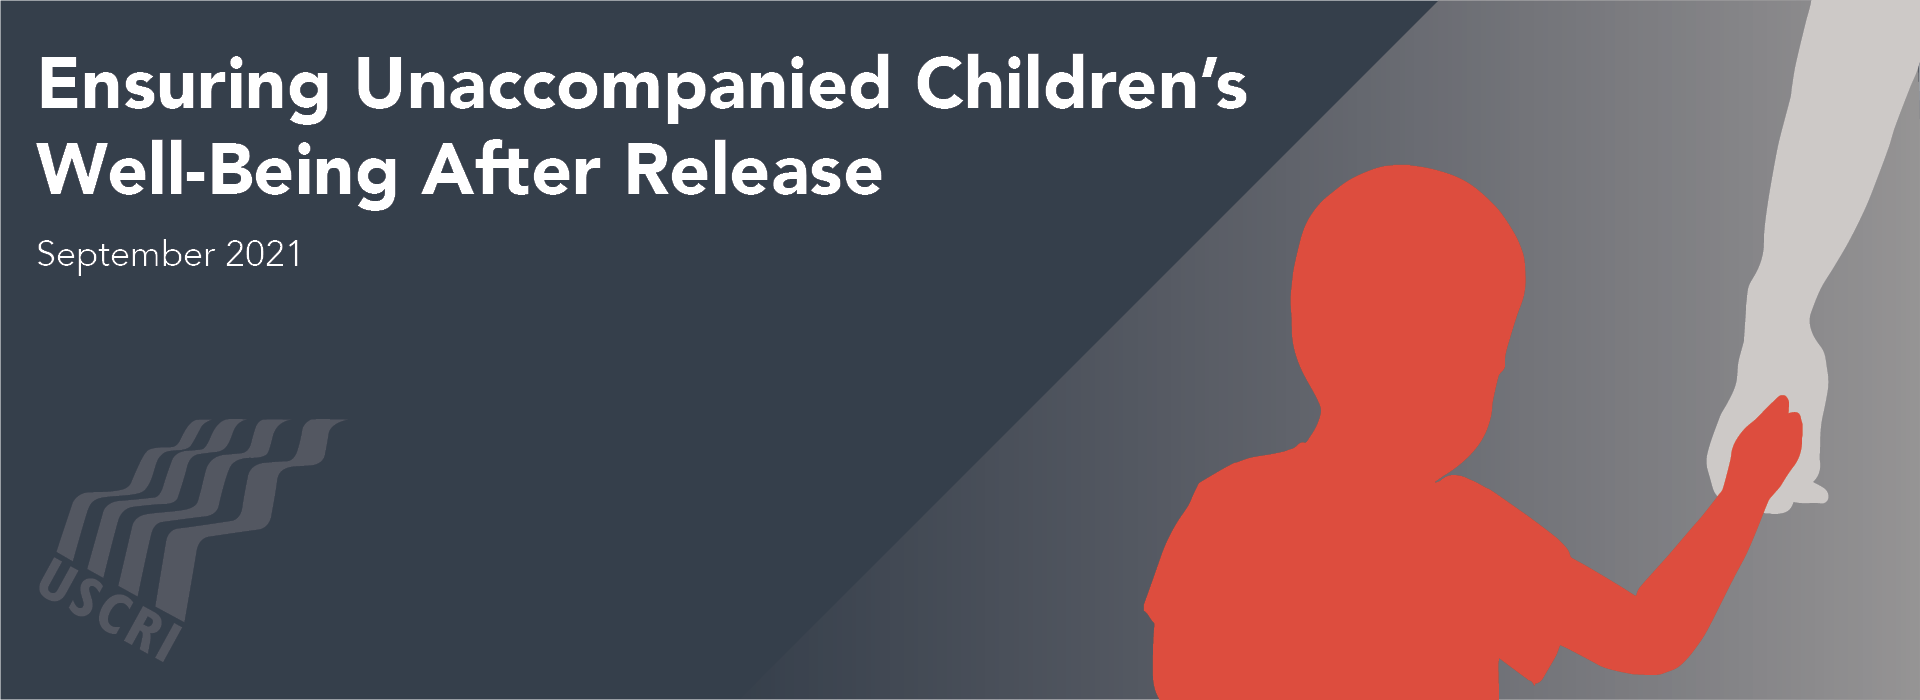 ensuring unaccompanied children well-being after release